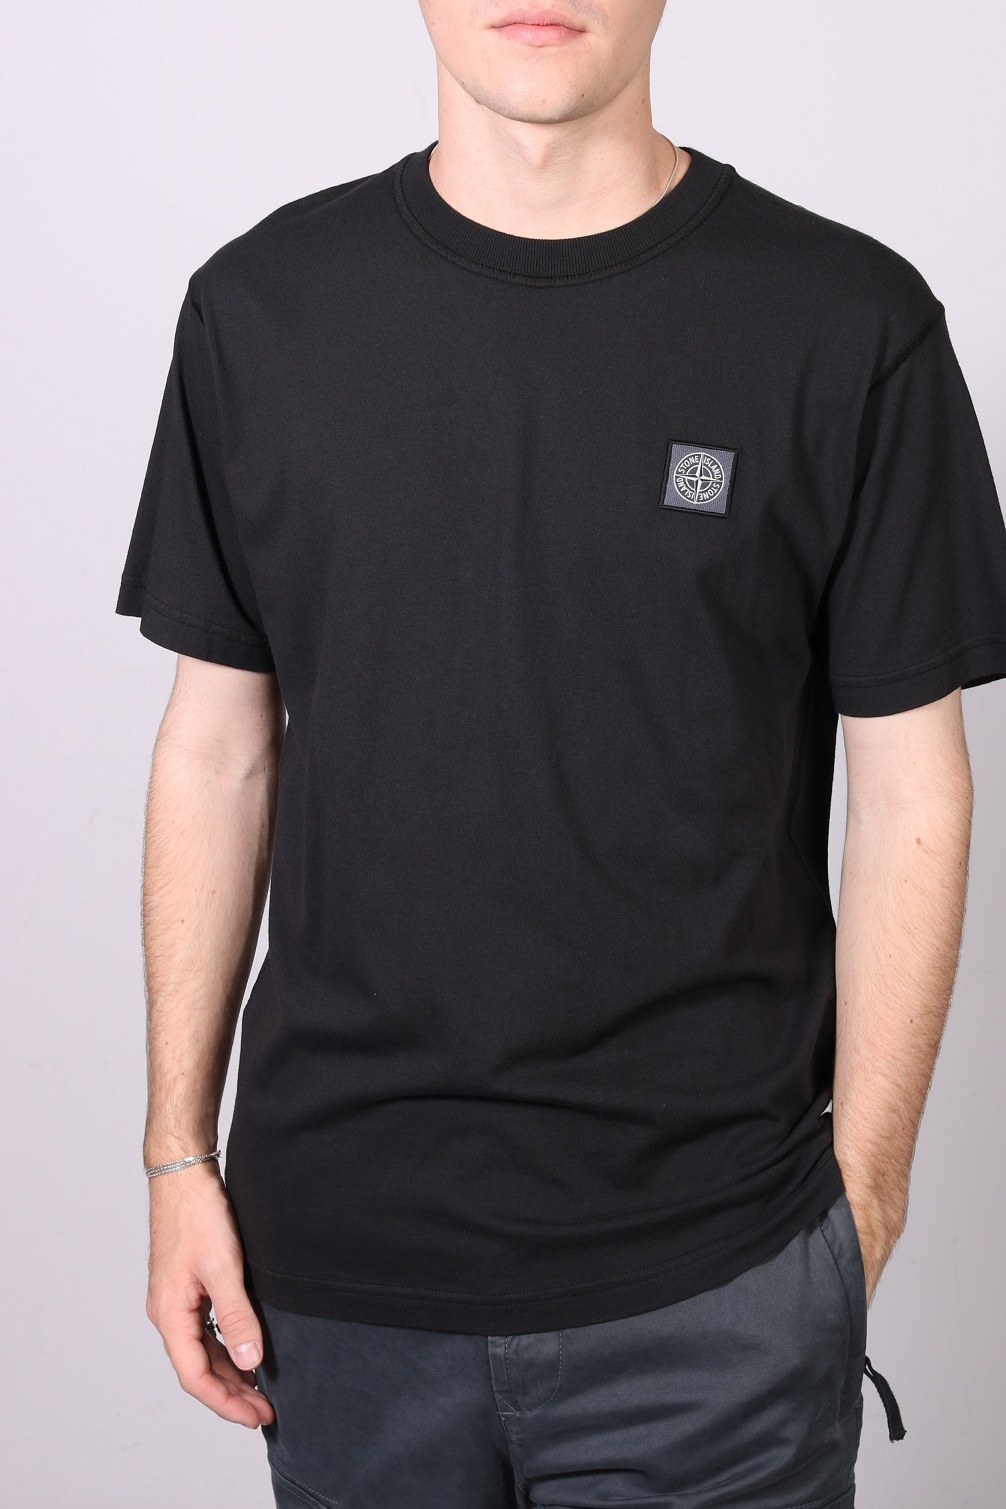 STONE ISLAND T-Shirt in Black 2XL